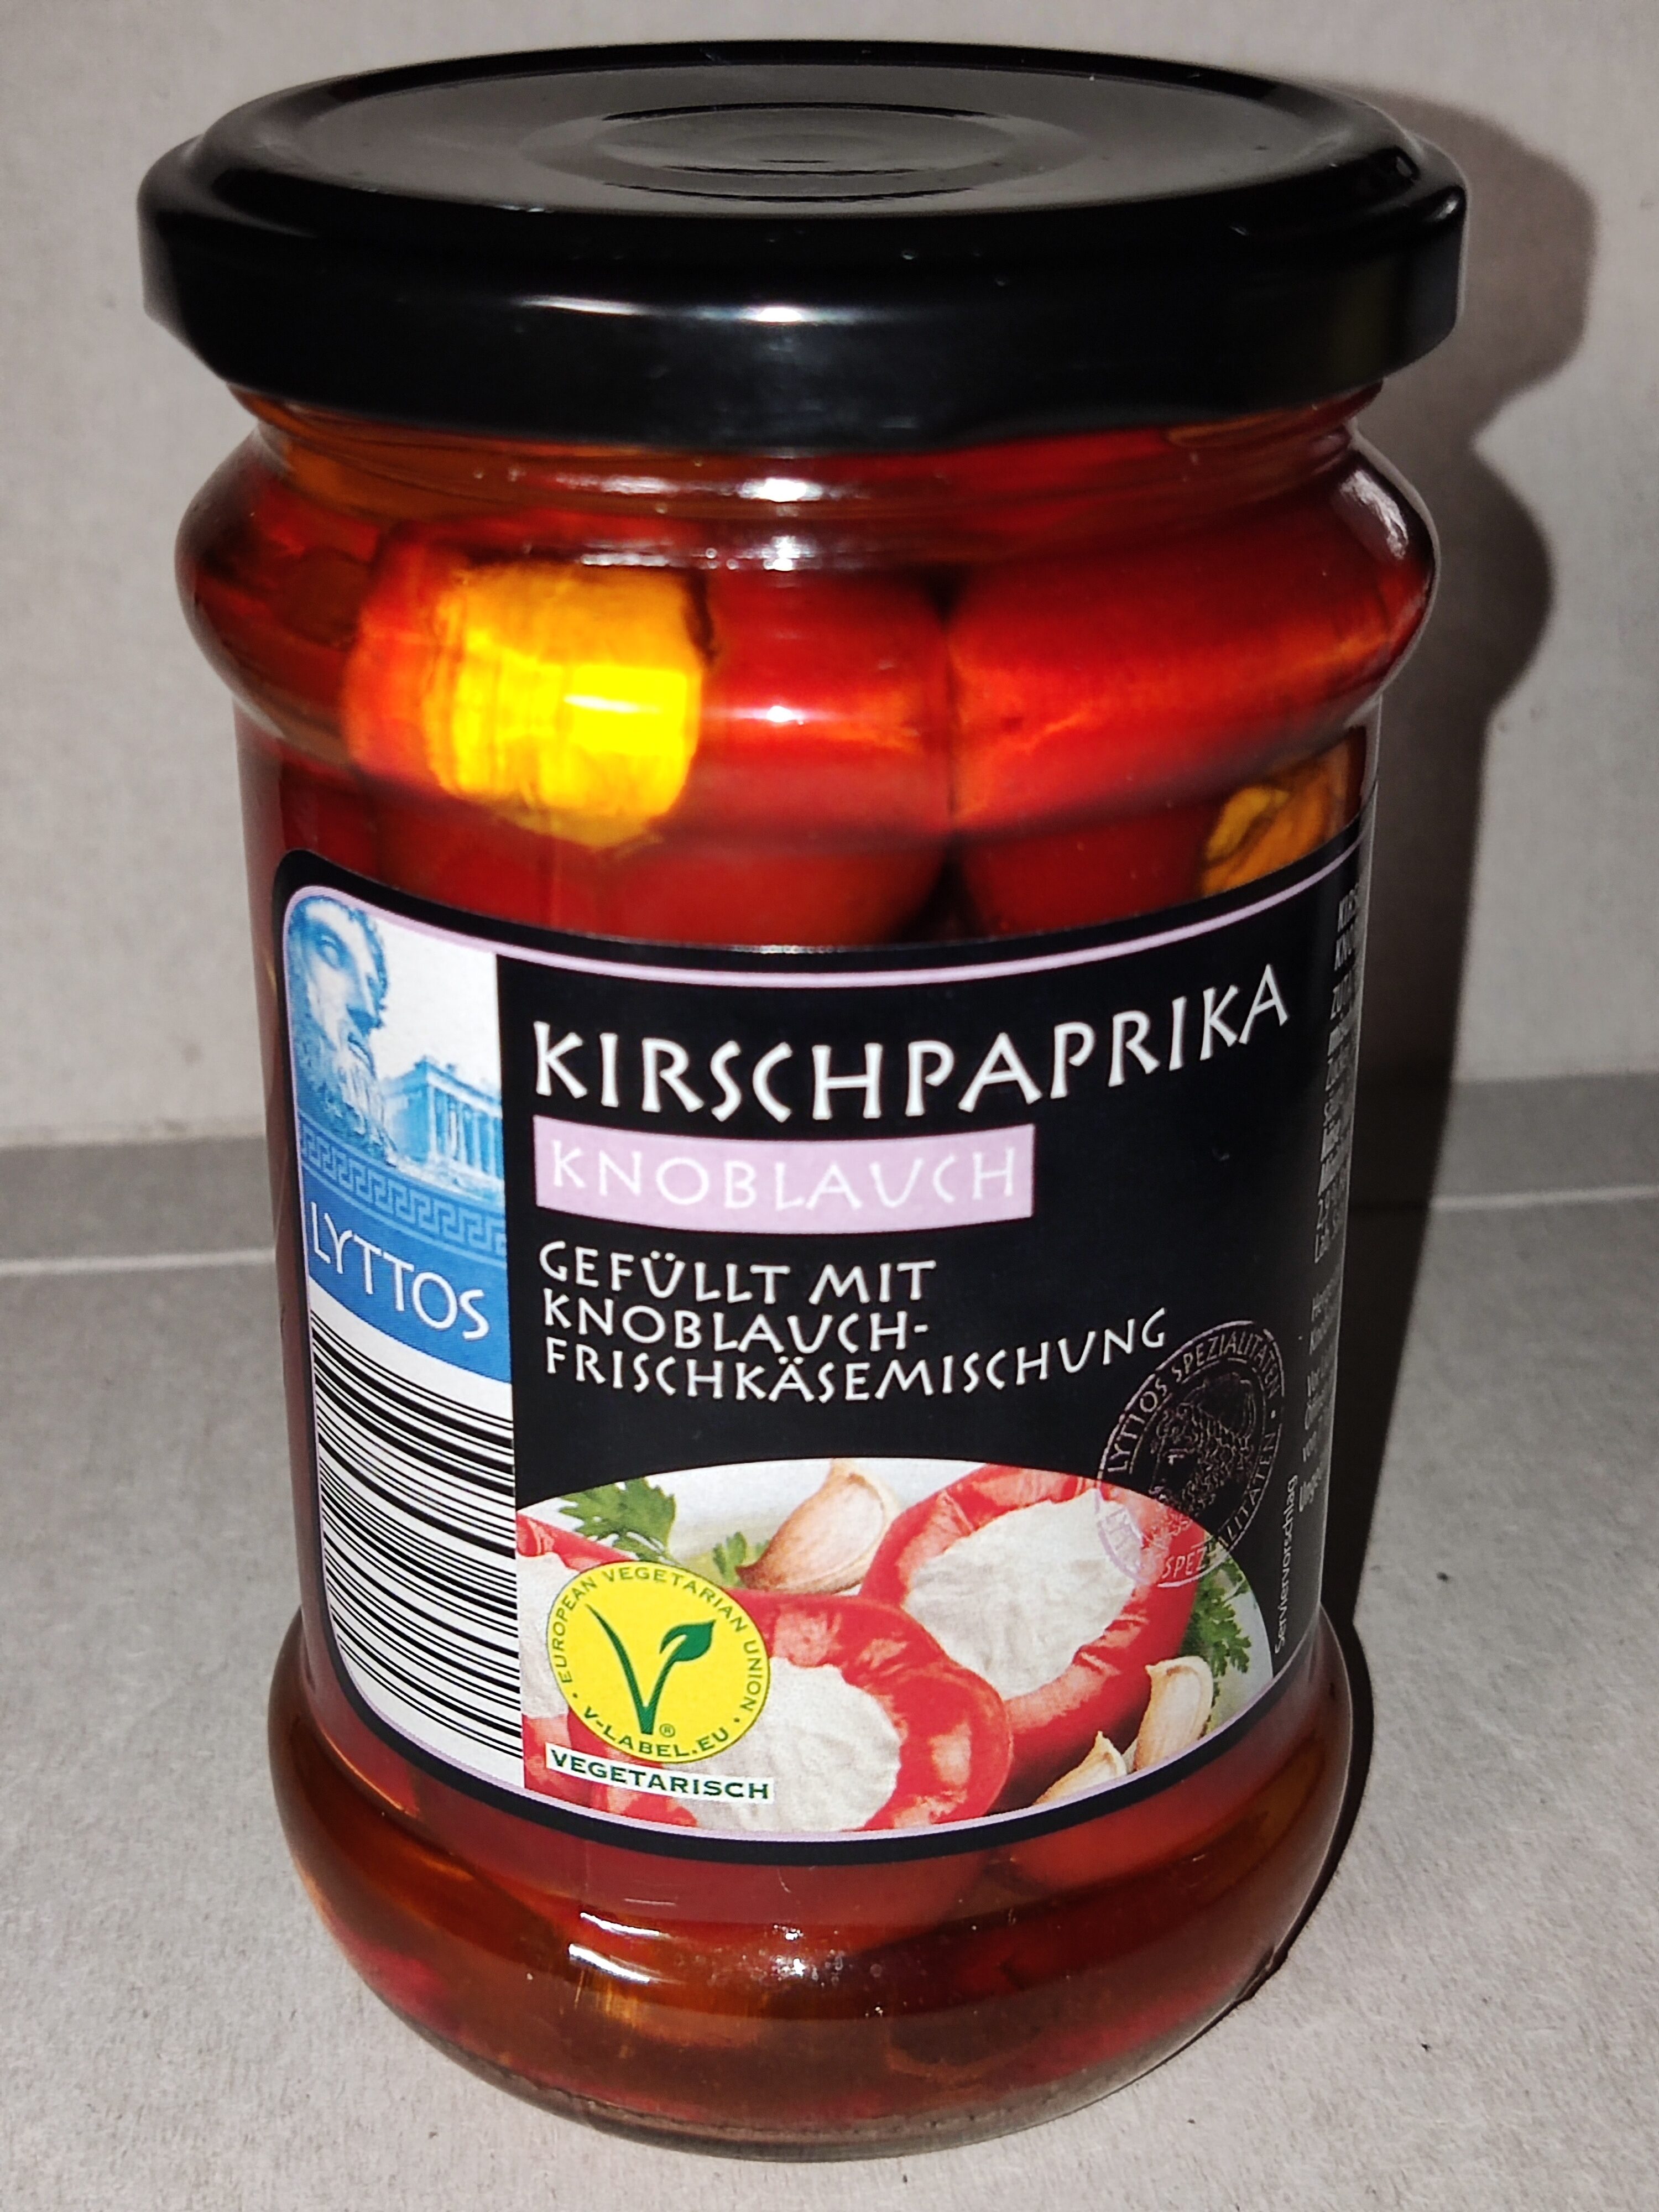 Kirschpaprika, gefüllt - Knoblauch - Produkt